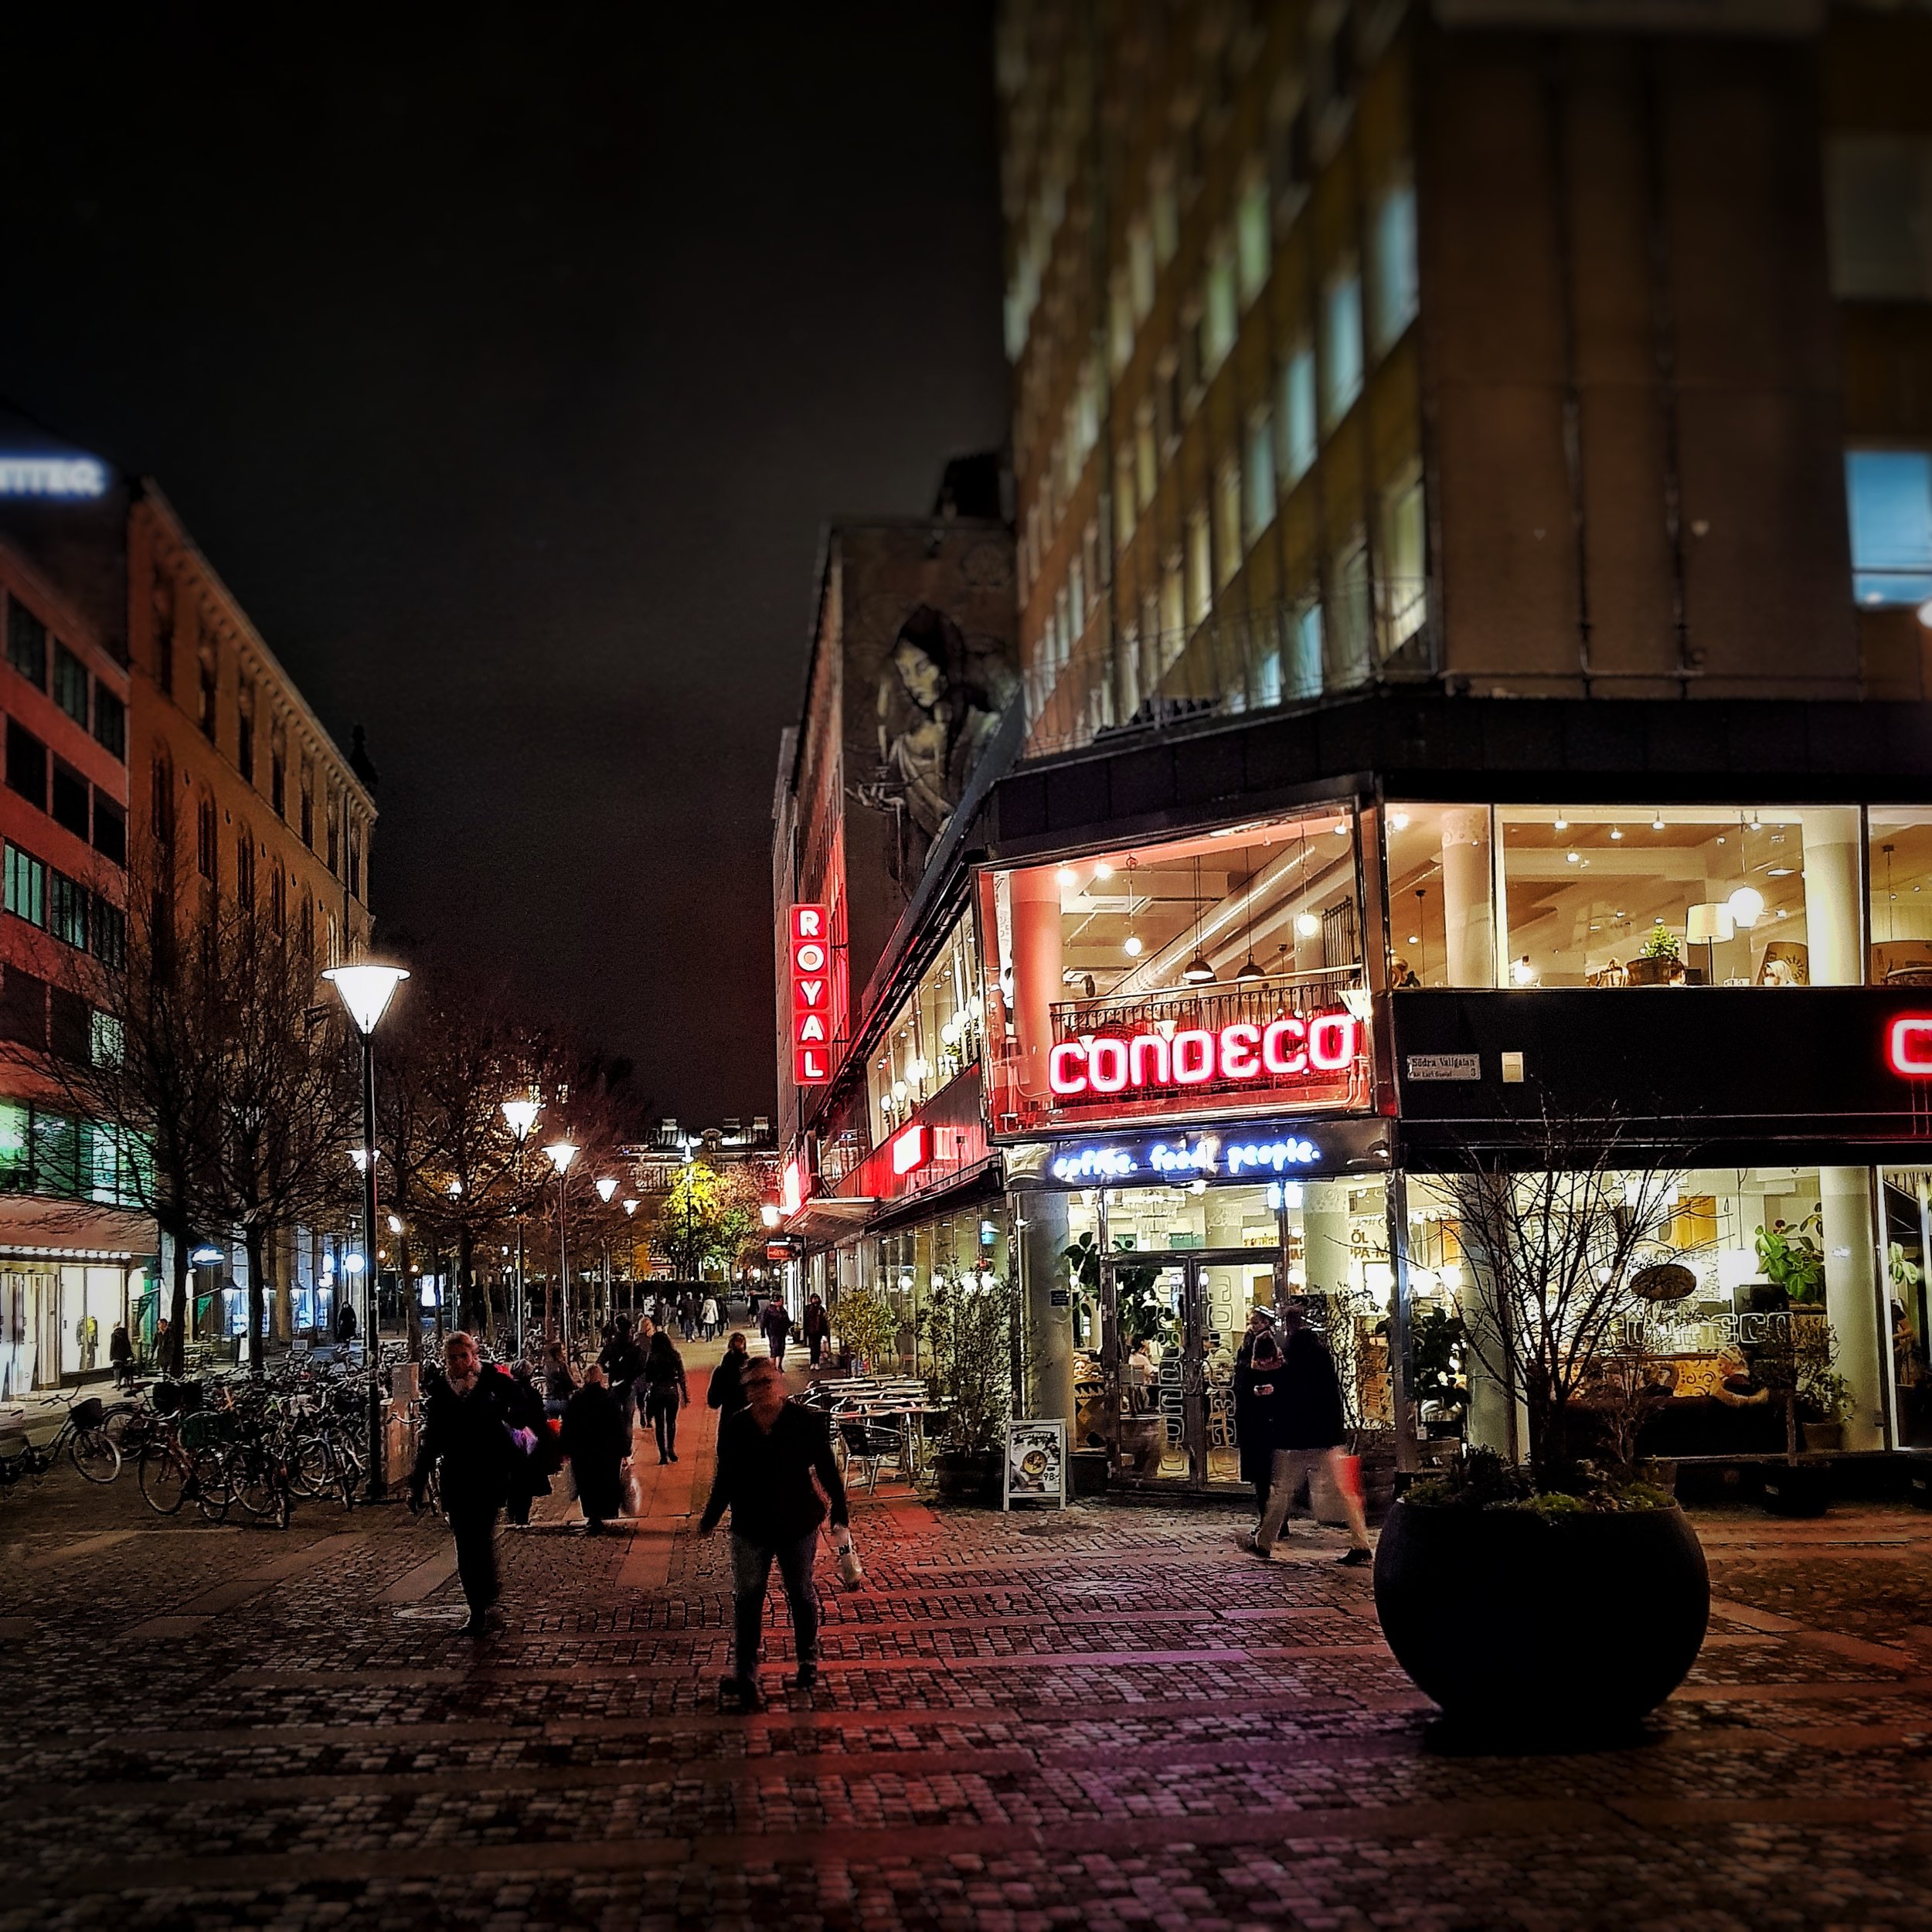 Day 318 - November 14: Night in the City